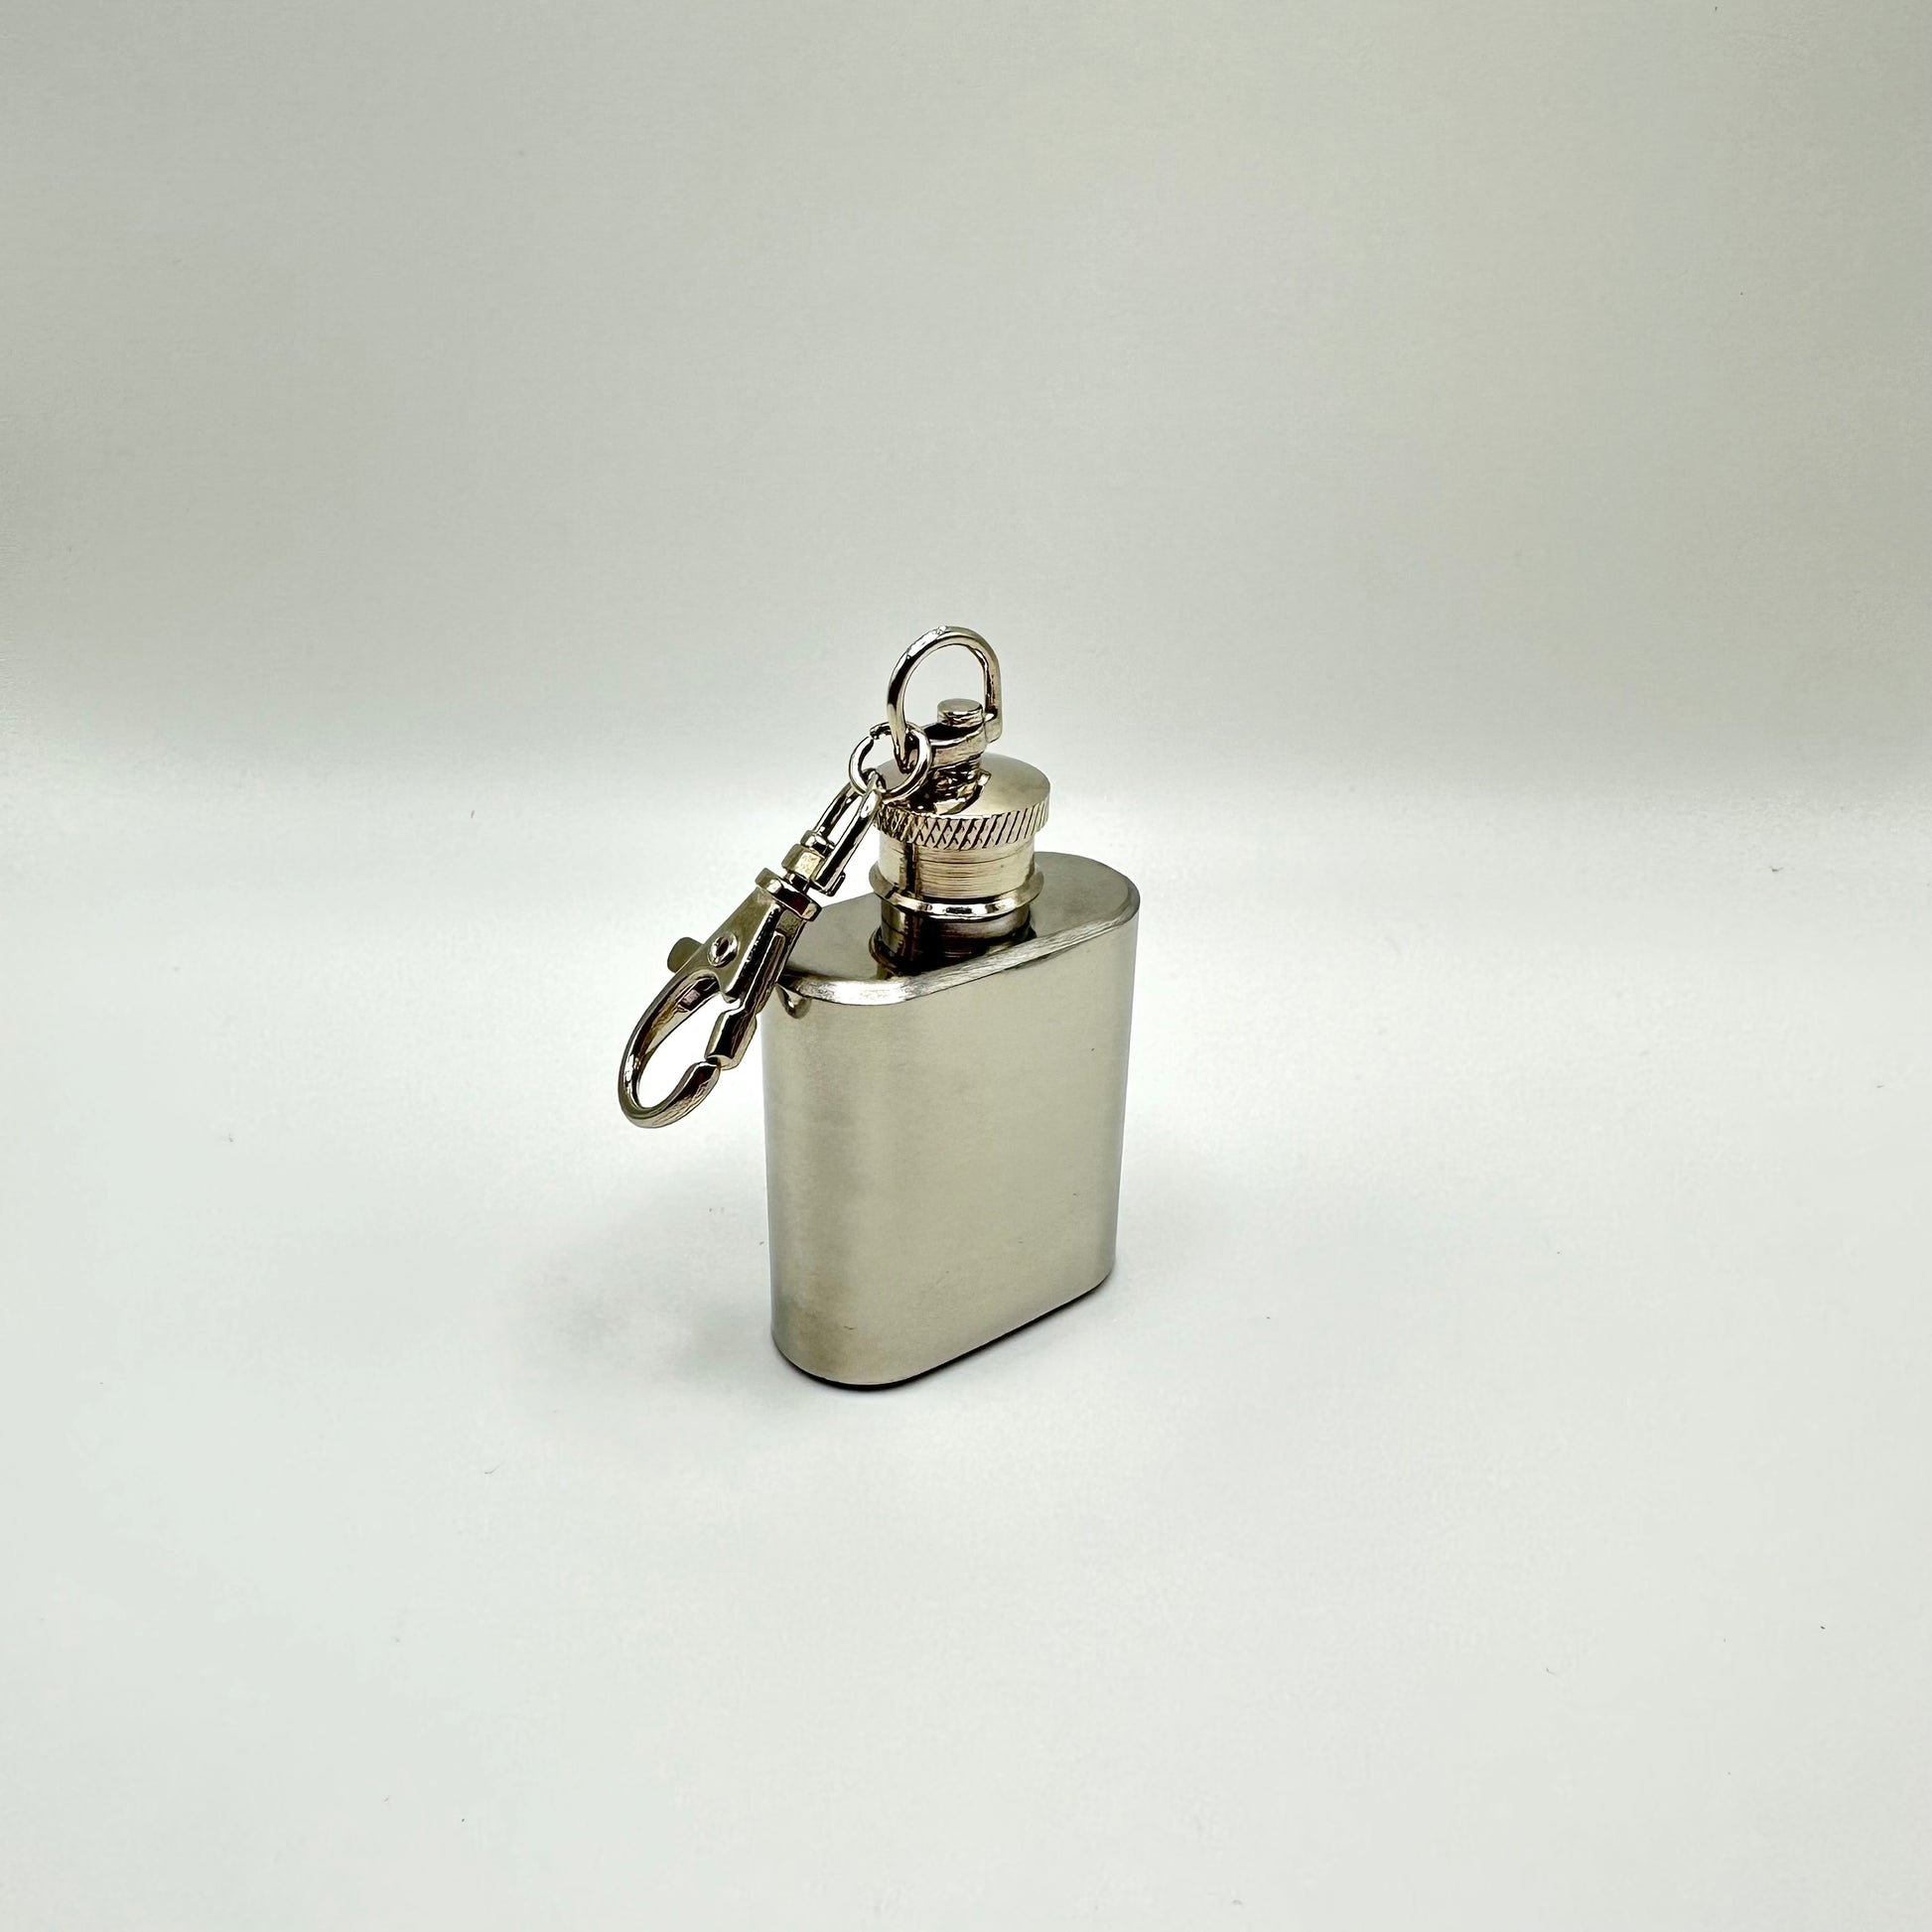 Mini stainless steel keychain flask.